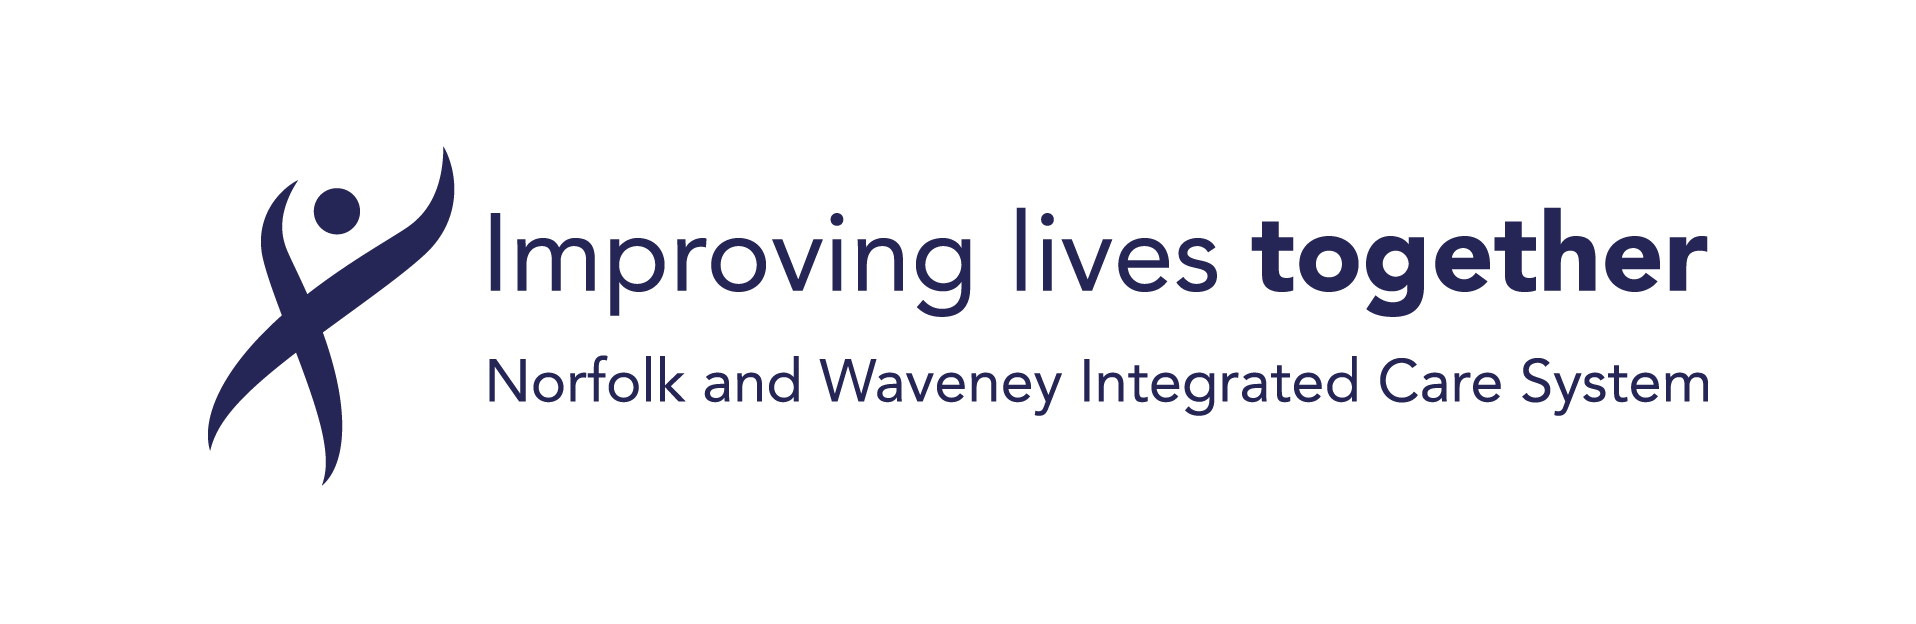 Norfolk & Waveney Health and Care Partnership  Population: 1.1 million